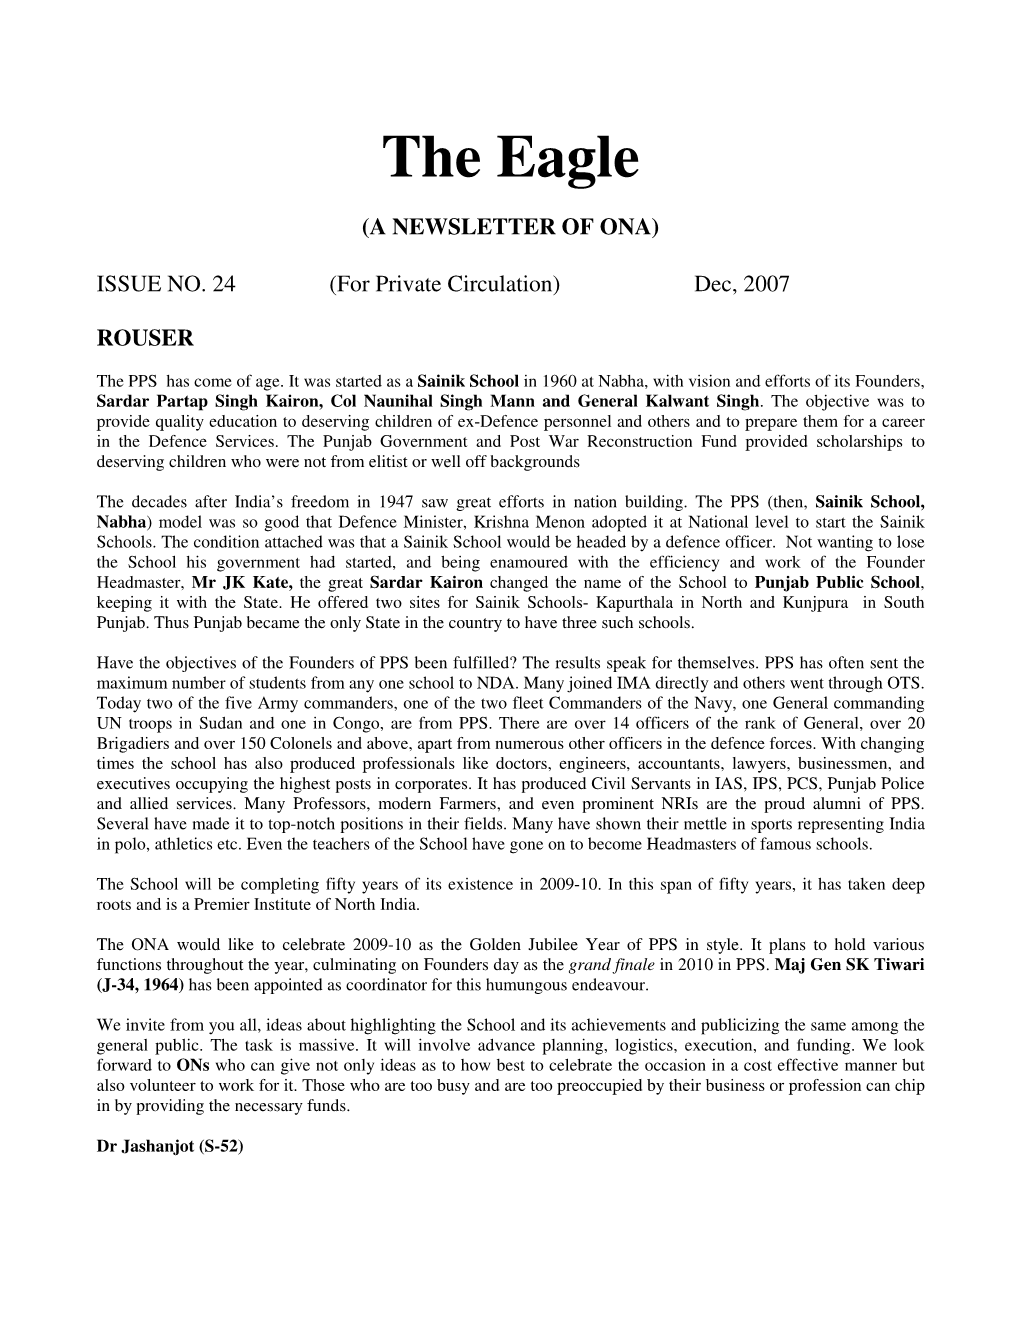 The Eagle – Dec 2007